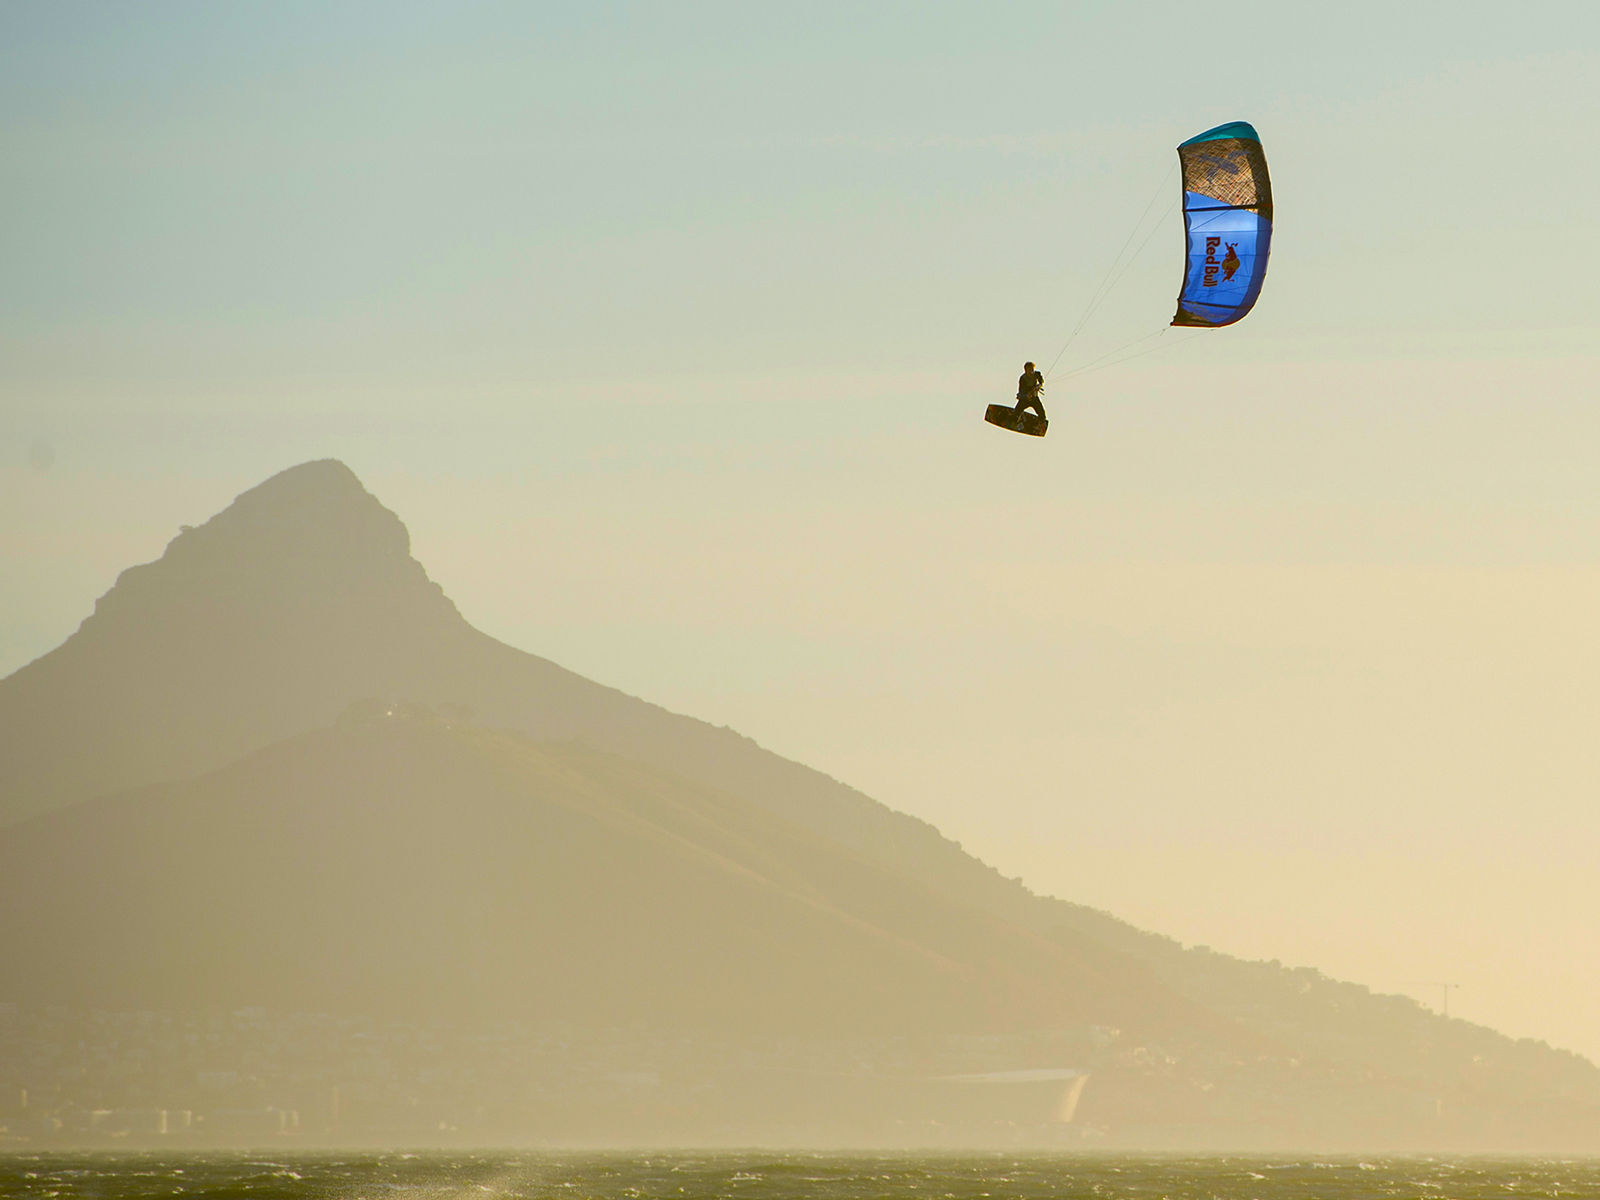 kitesurf wallpaper image - Ruben Lenten on the Best Extract in Cape Town - kitesurf megaloop jump - in resolution: Standard 4:3 1600 X 1200